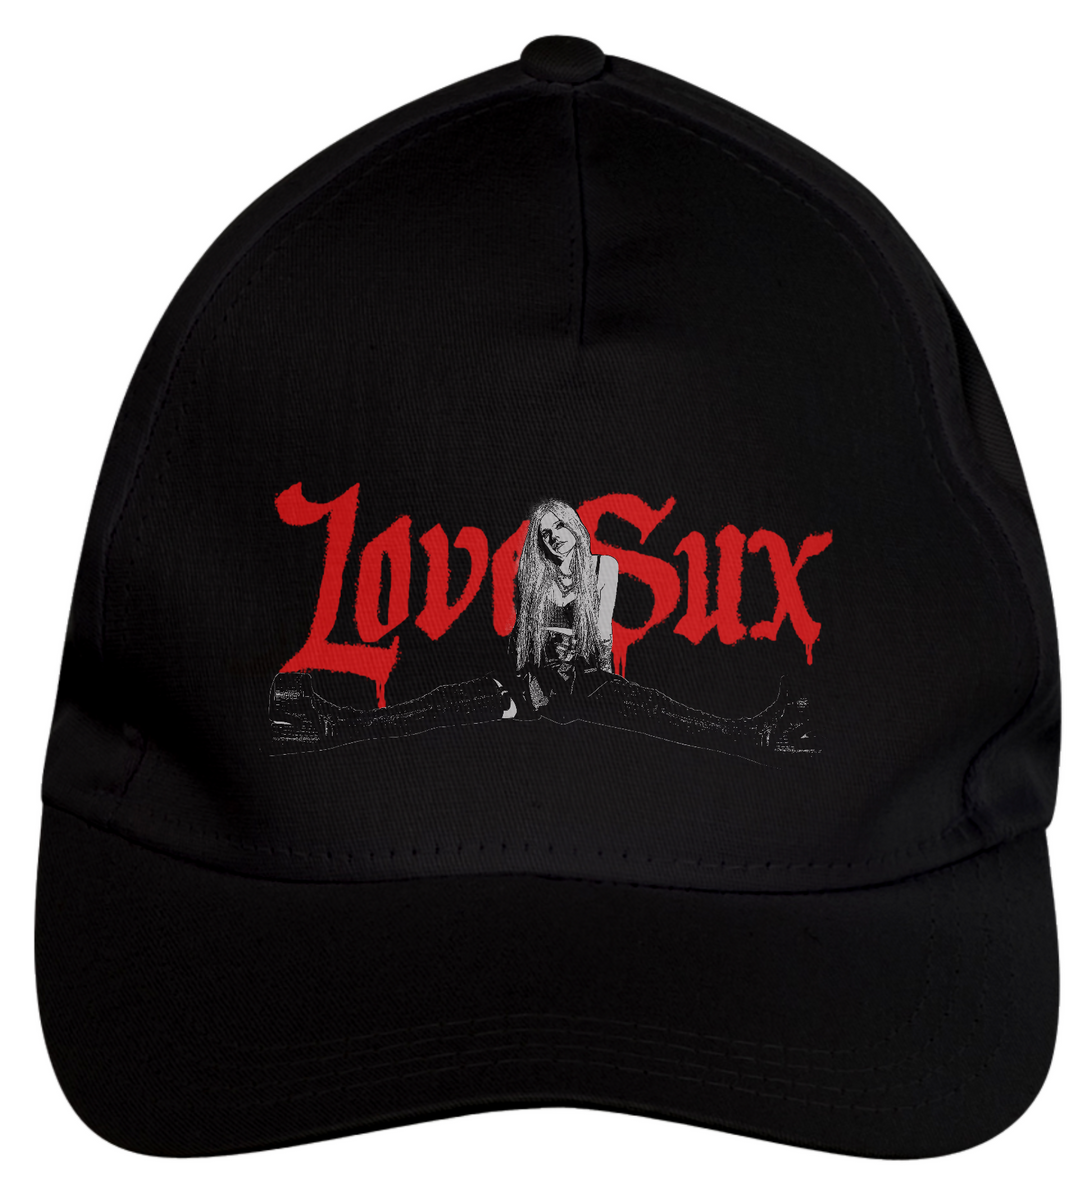 Nome do produto: Avril Lavigne - Love Sux - Boné   